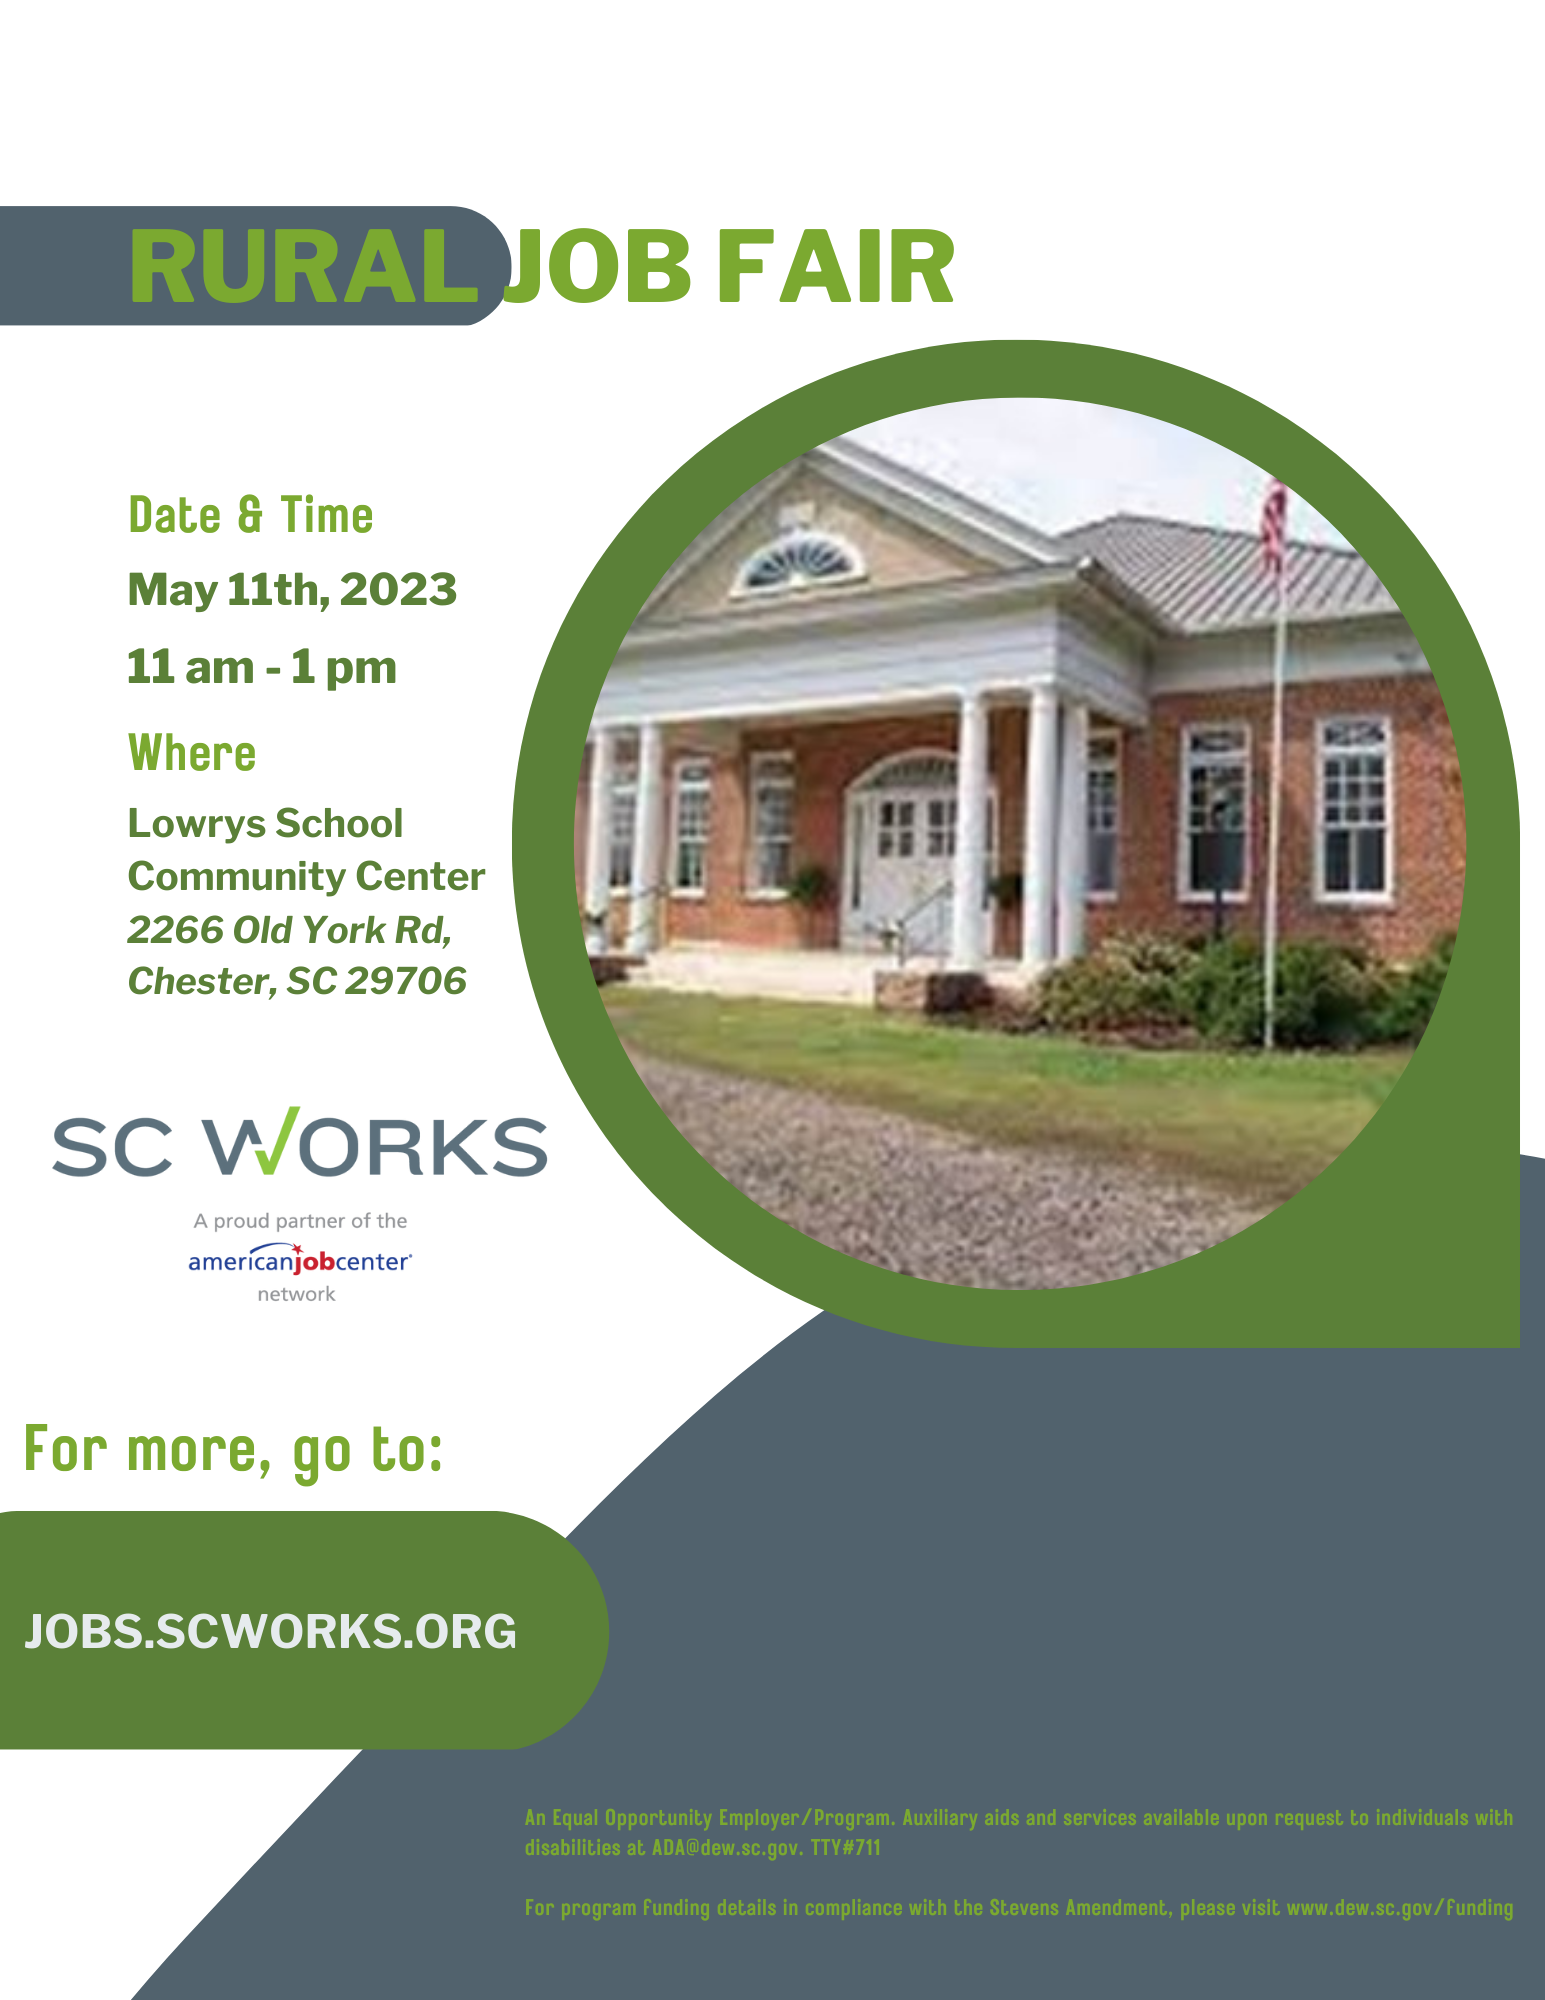 Rural Job Fair @ Lowry's School Community Center